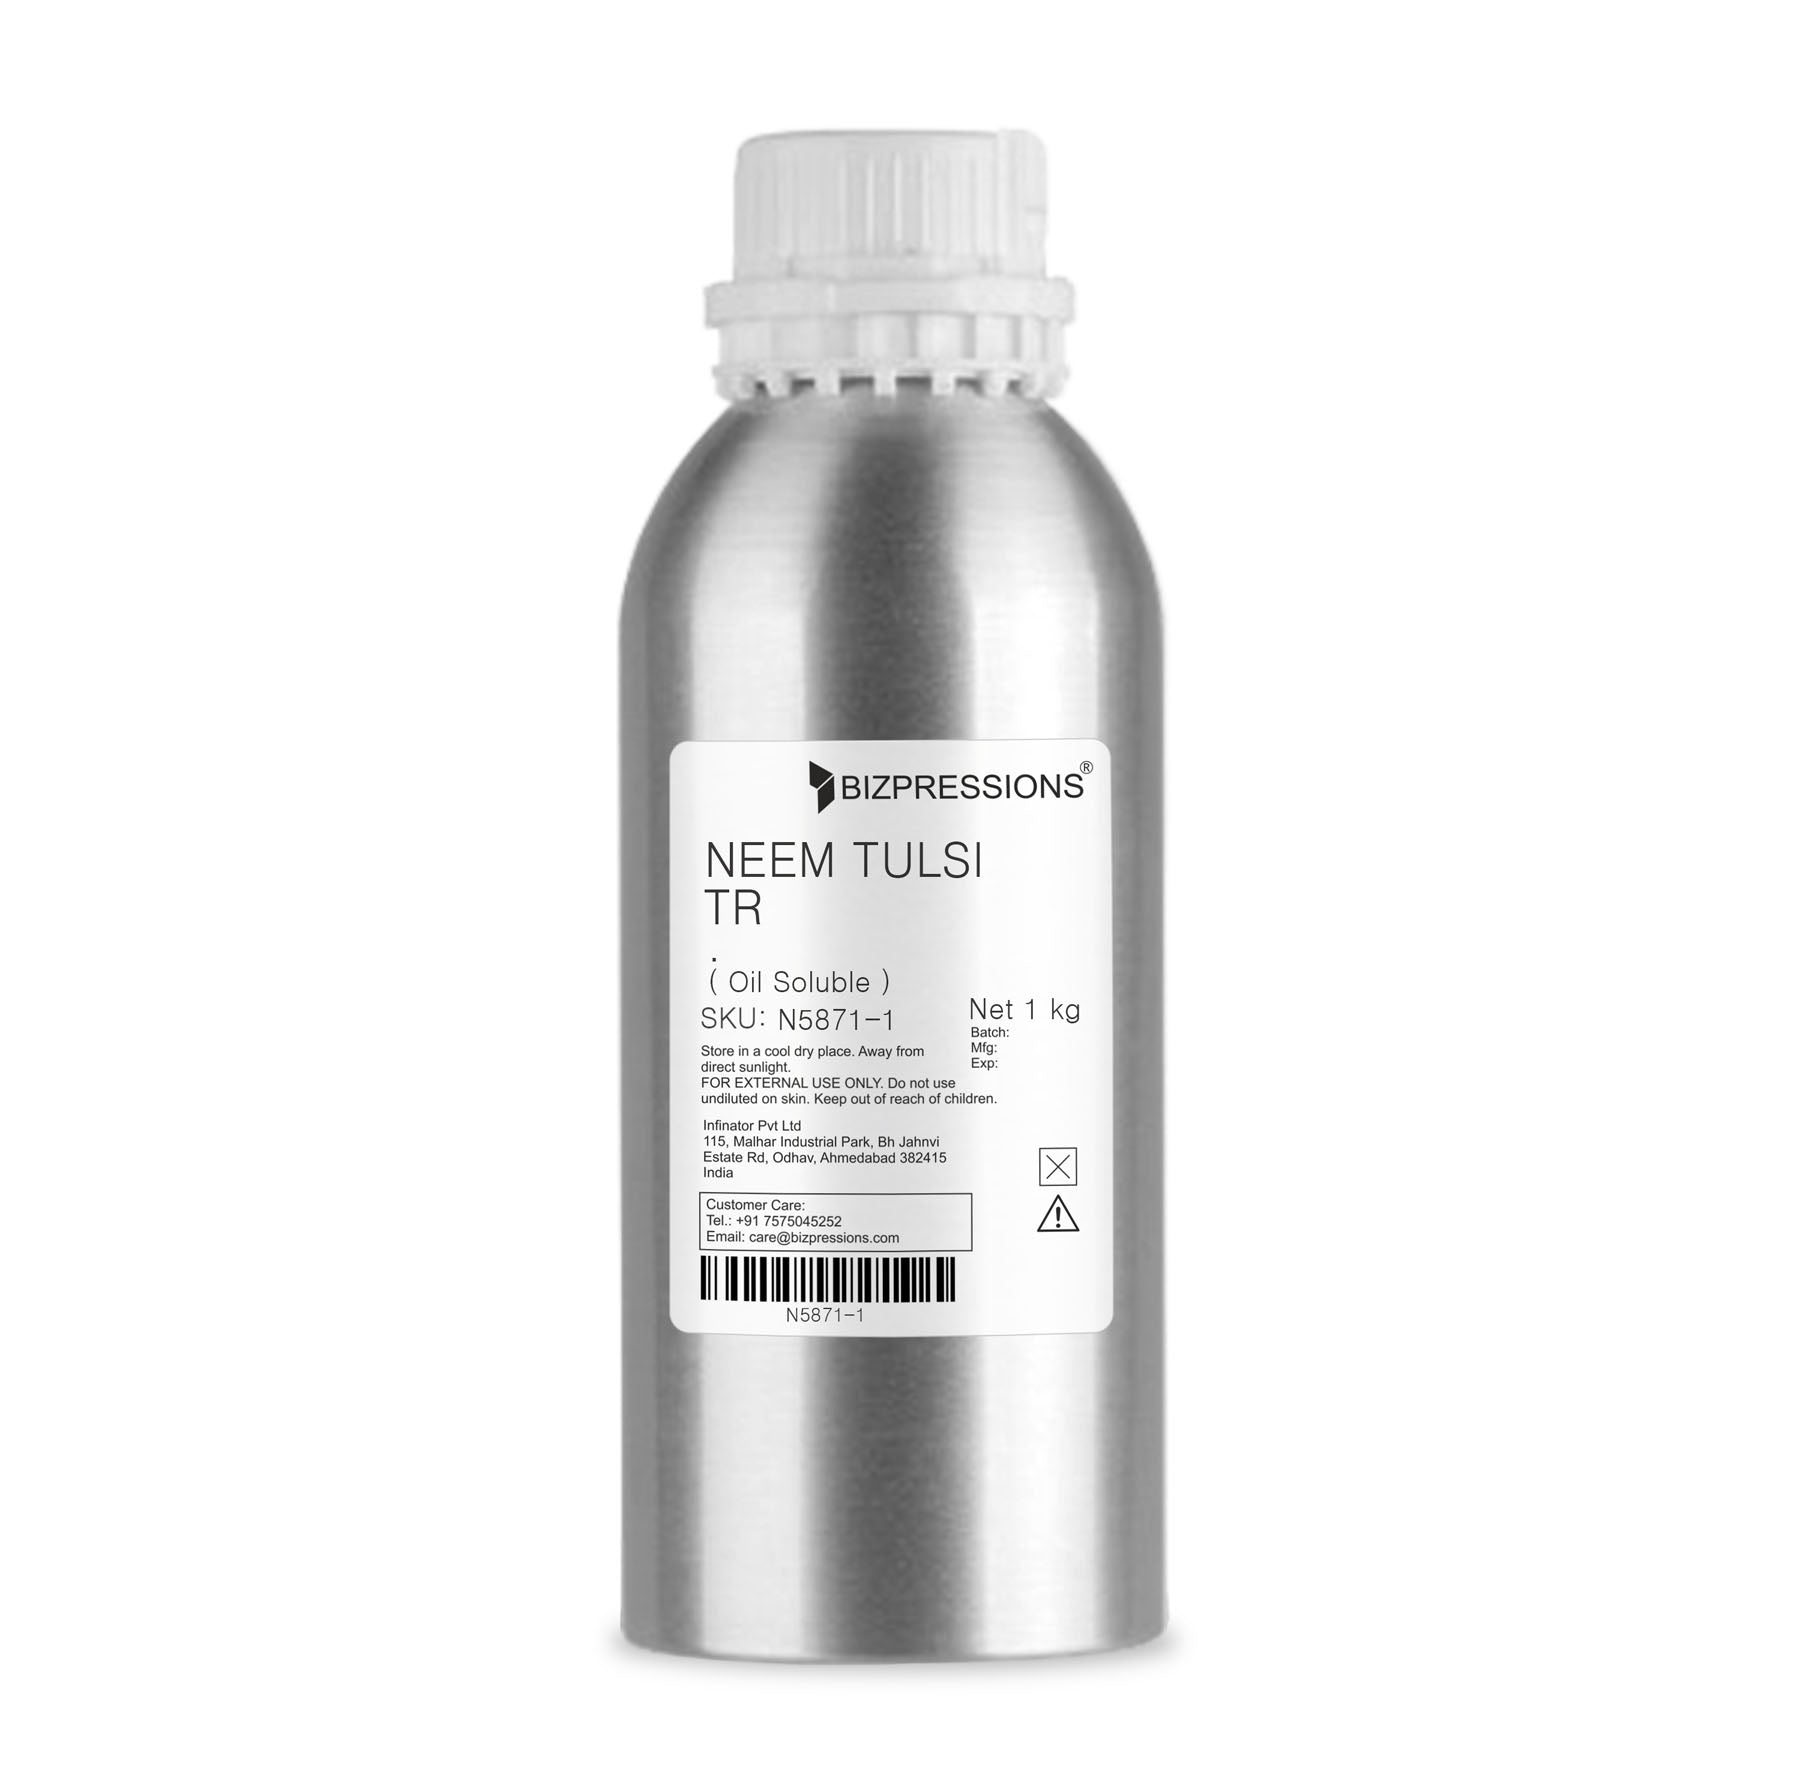 NEEM TULSI TR - Fragrance ( Oil Soluble ) - 1 kg